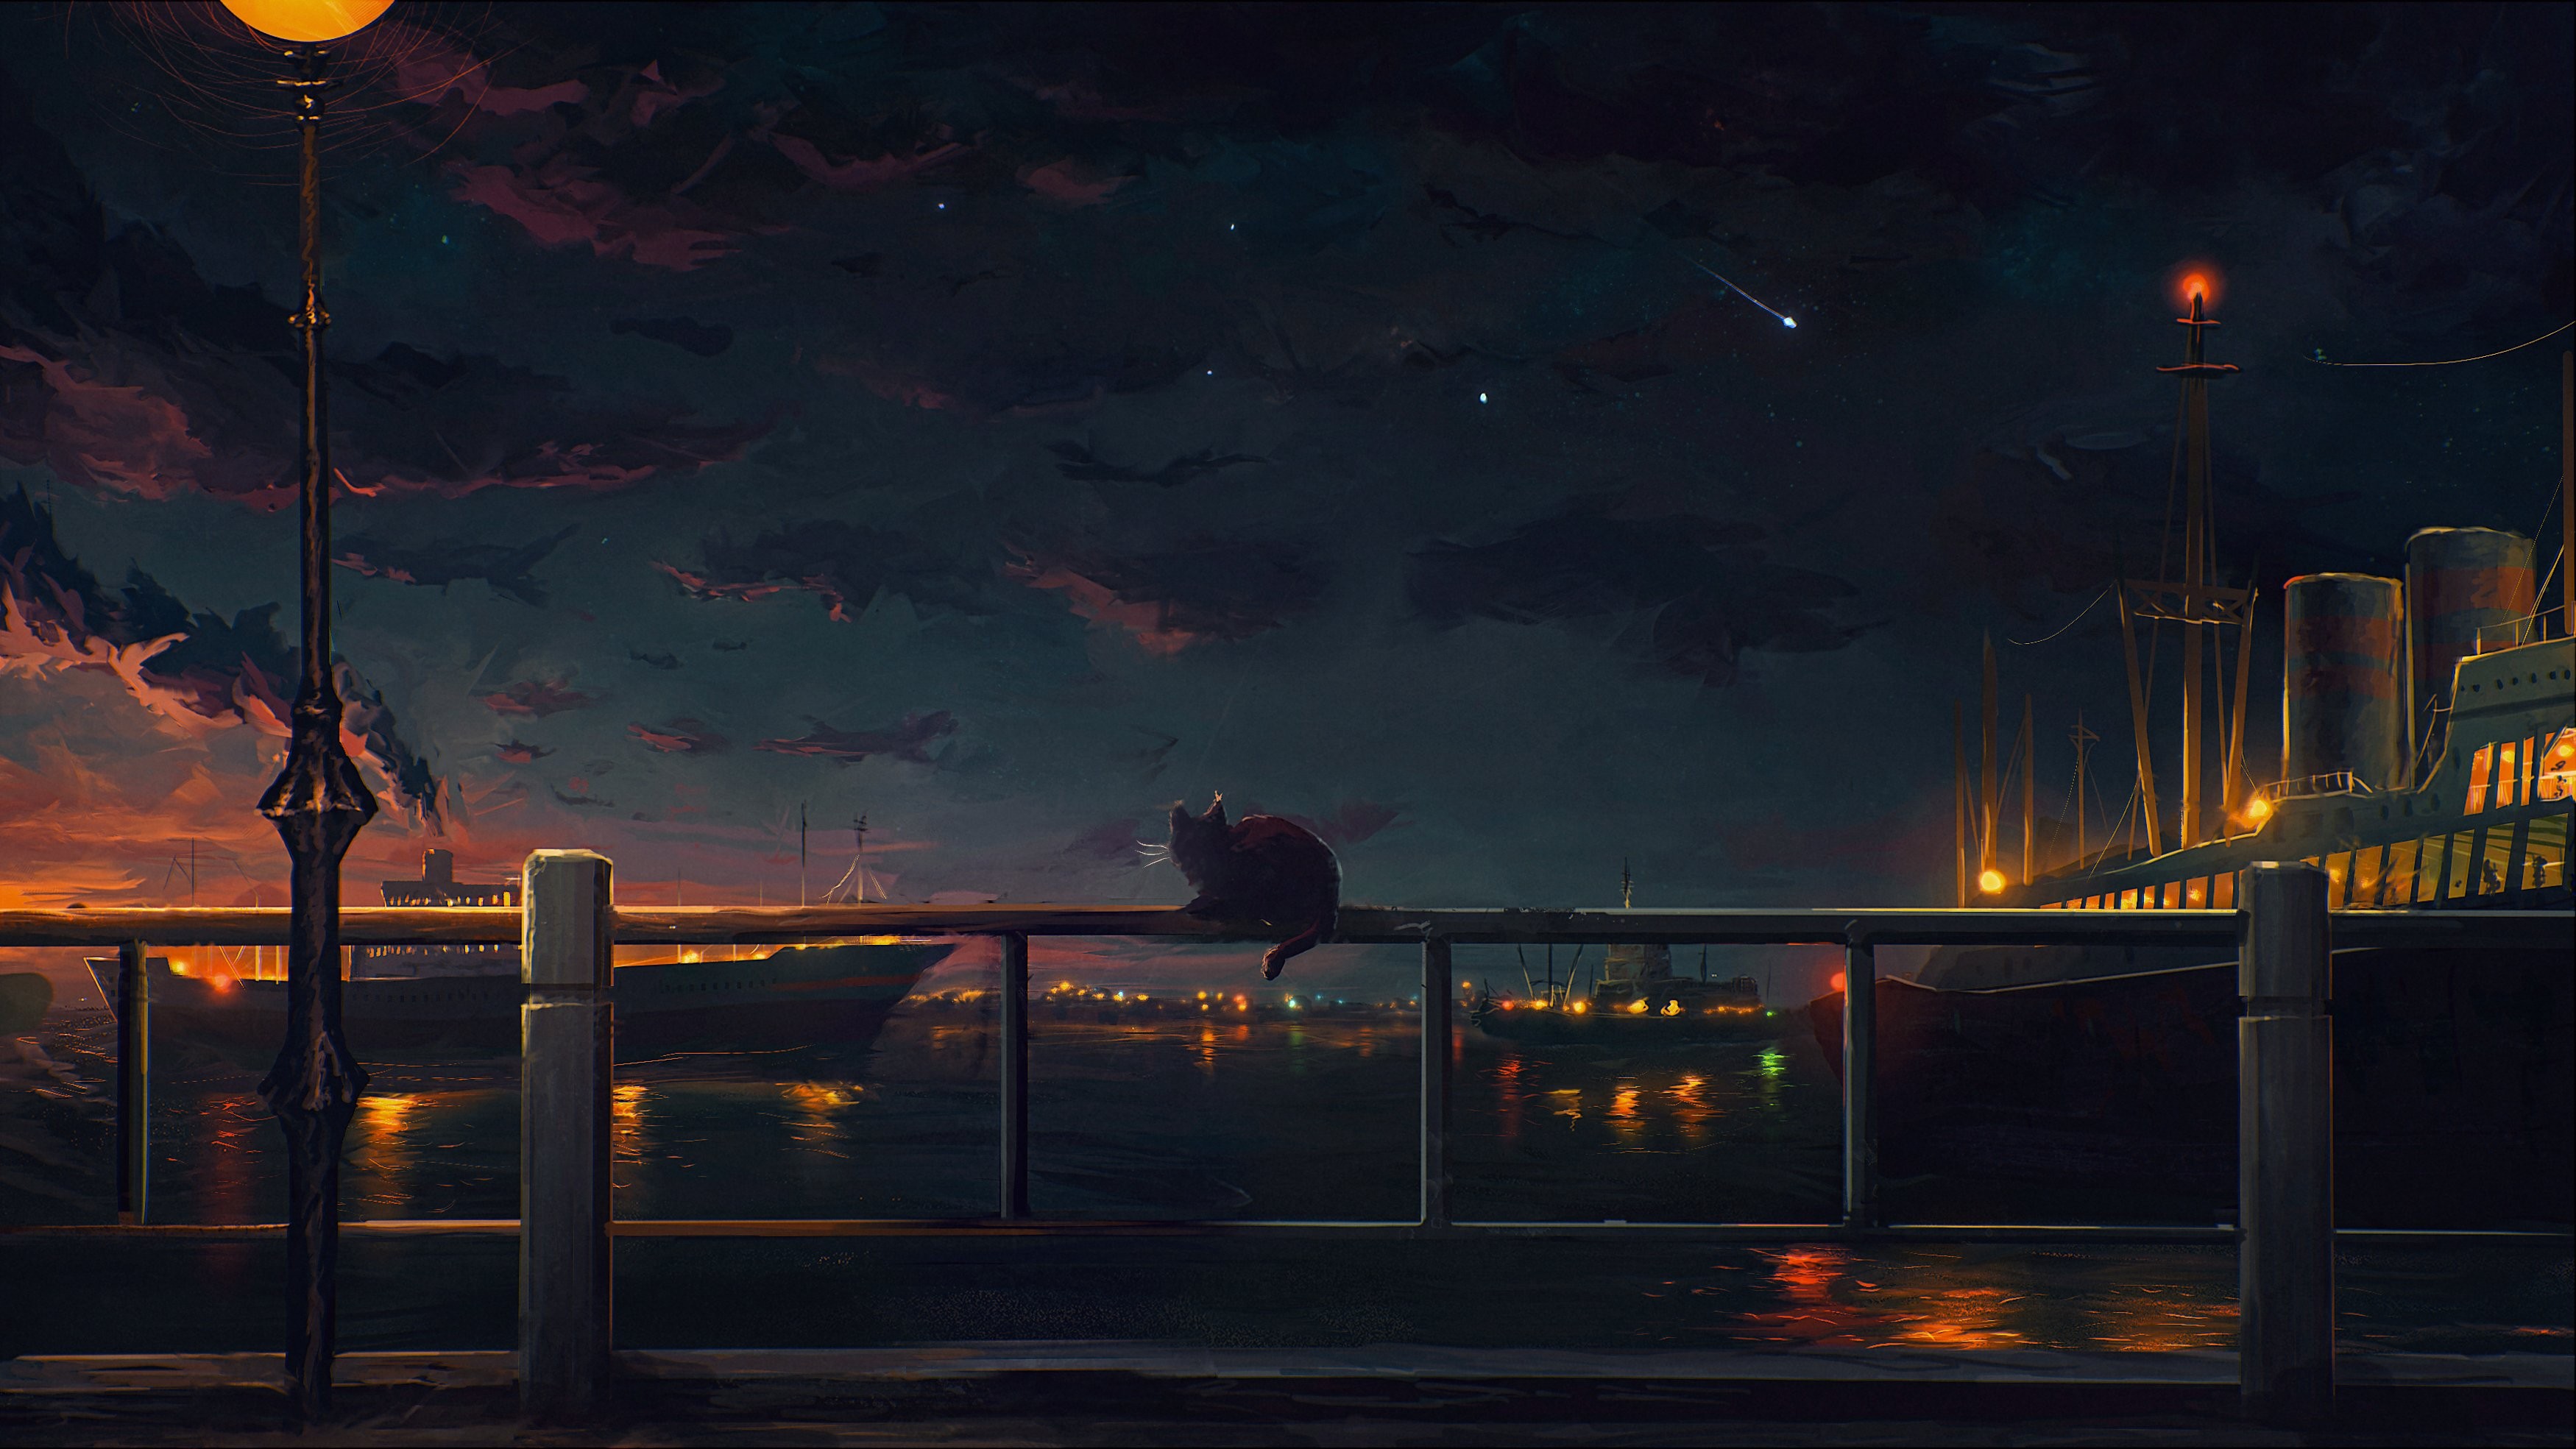 anime landscape wallpaper night